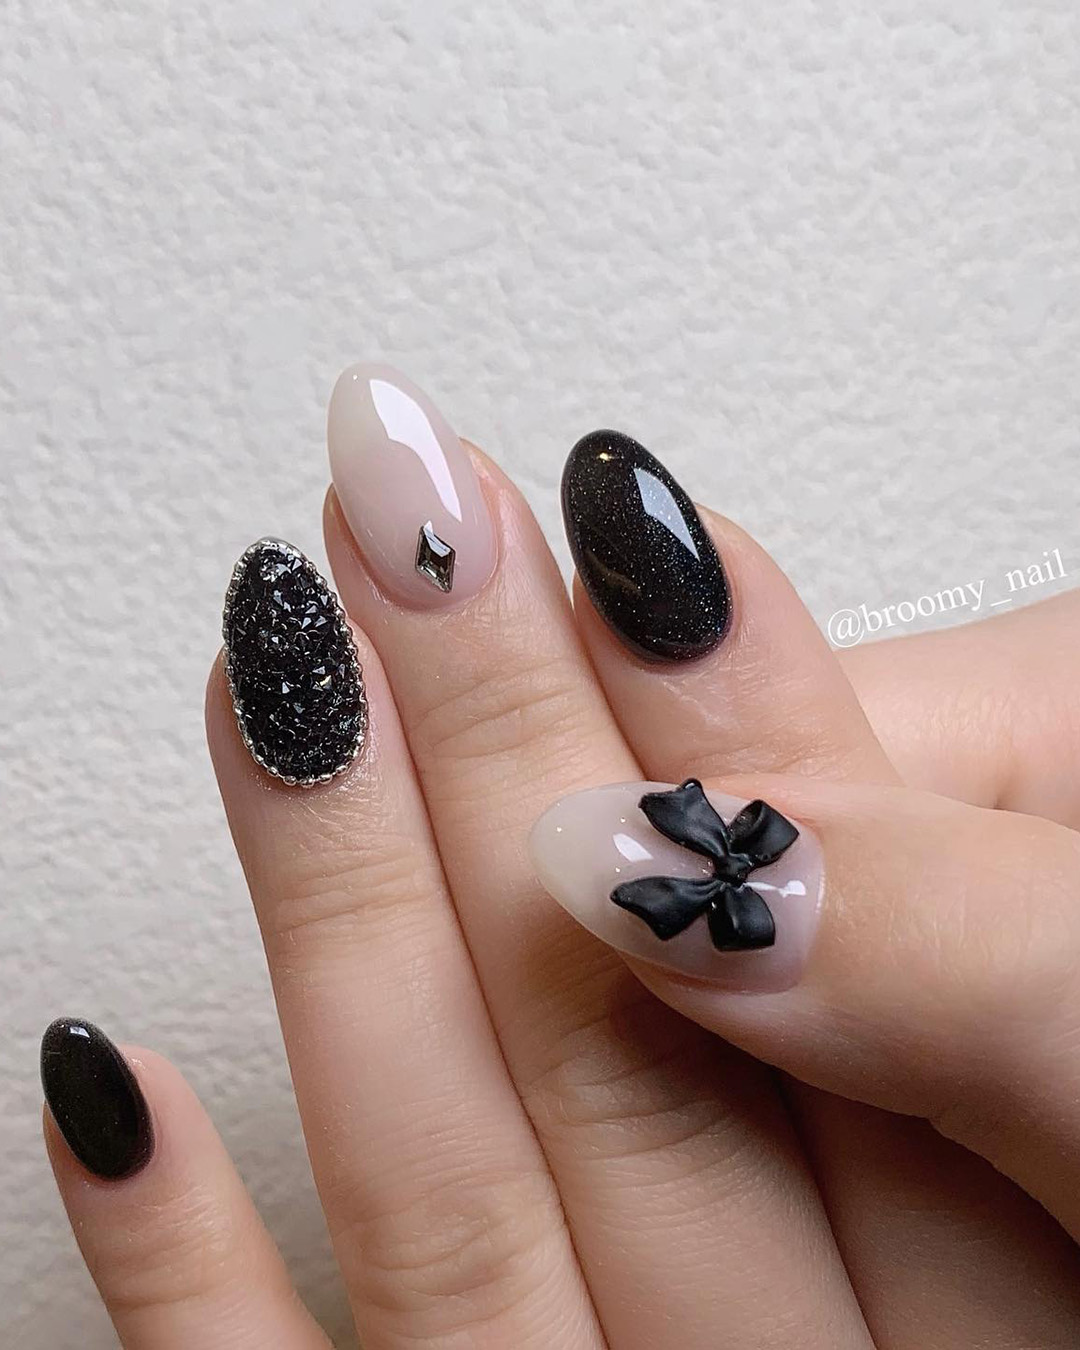 black wedding nails cute nude with bow decor broomy_nail